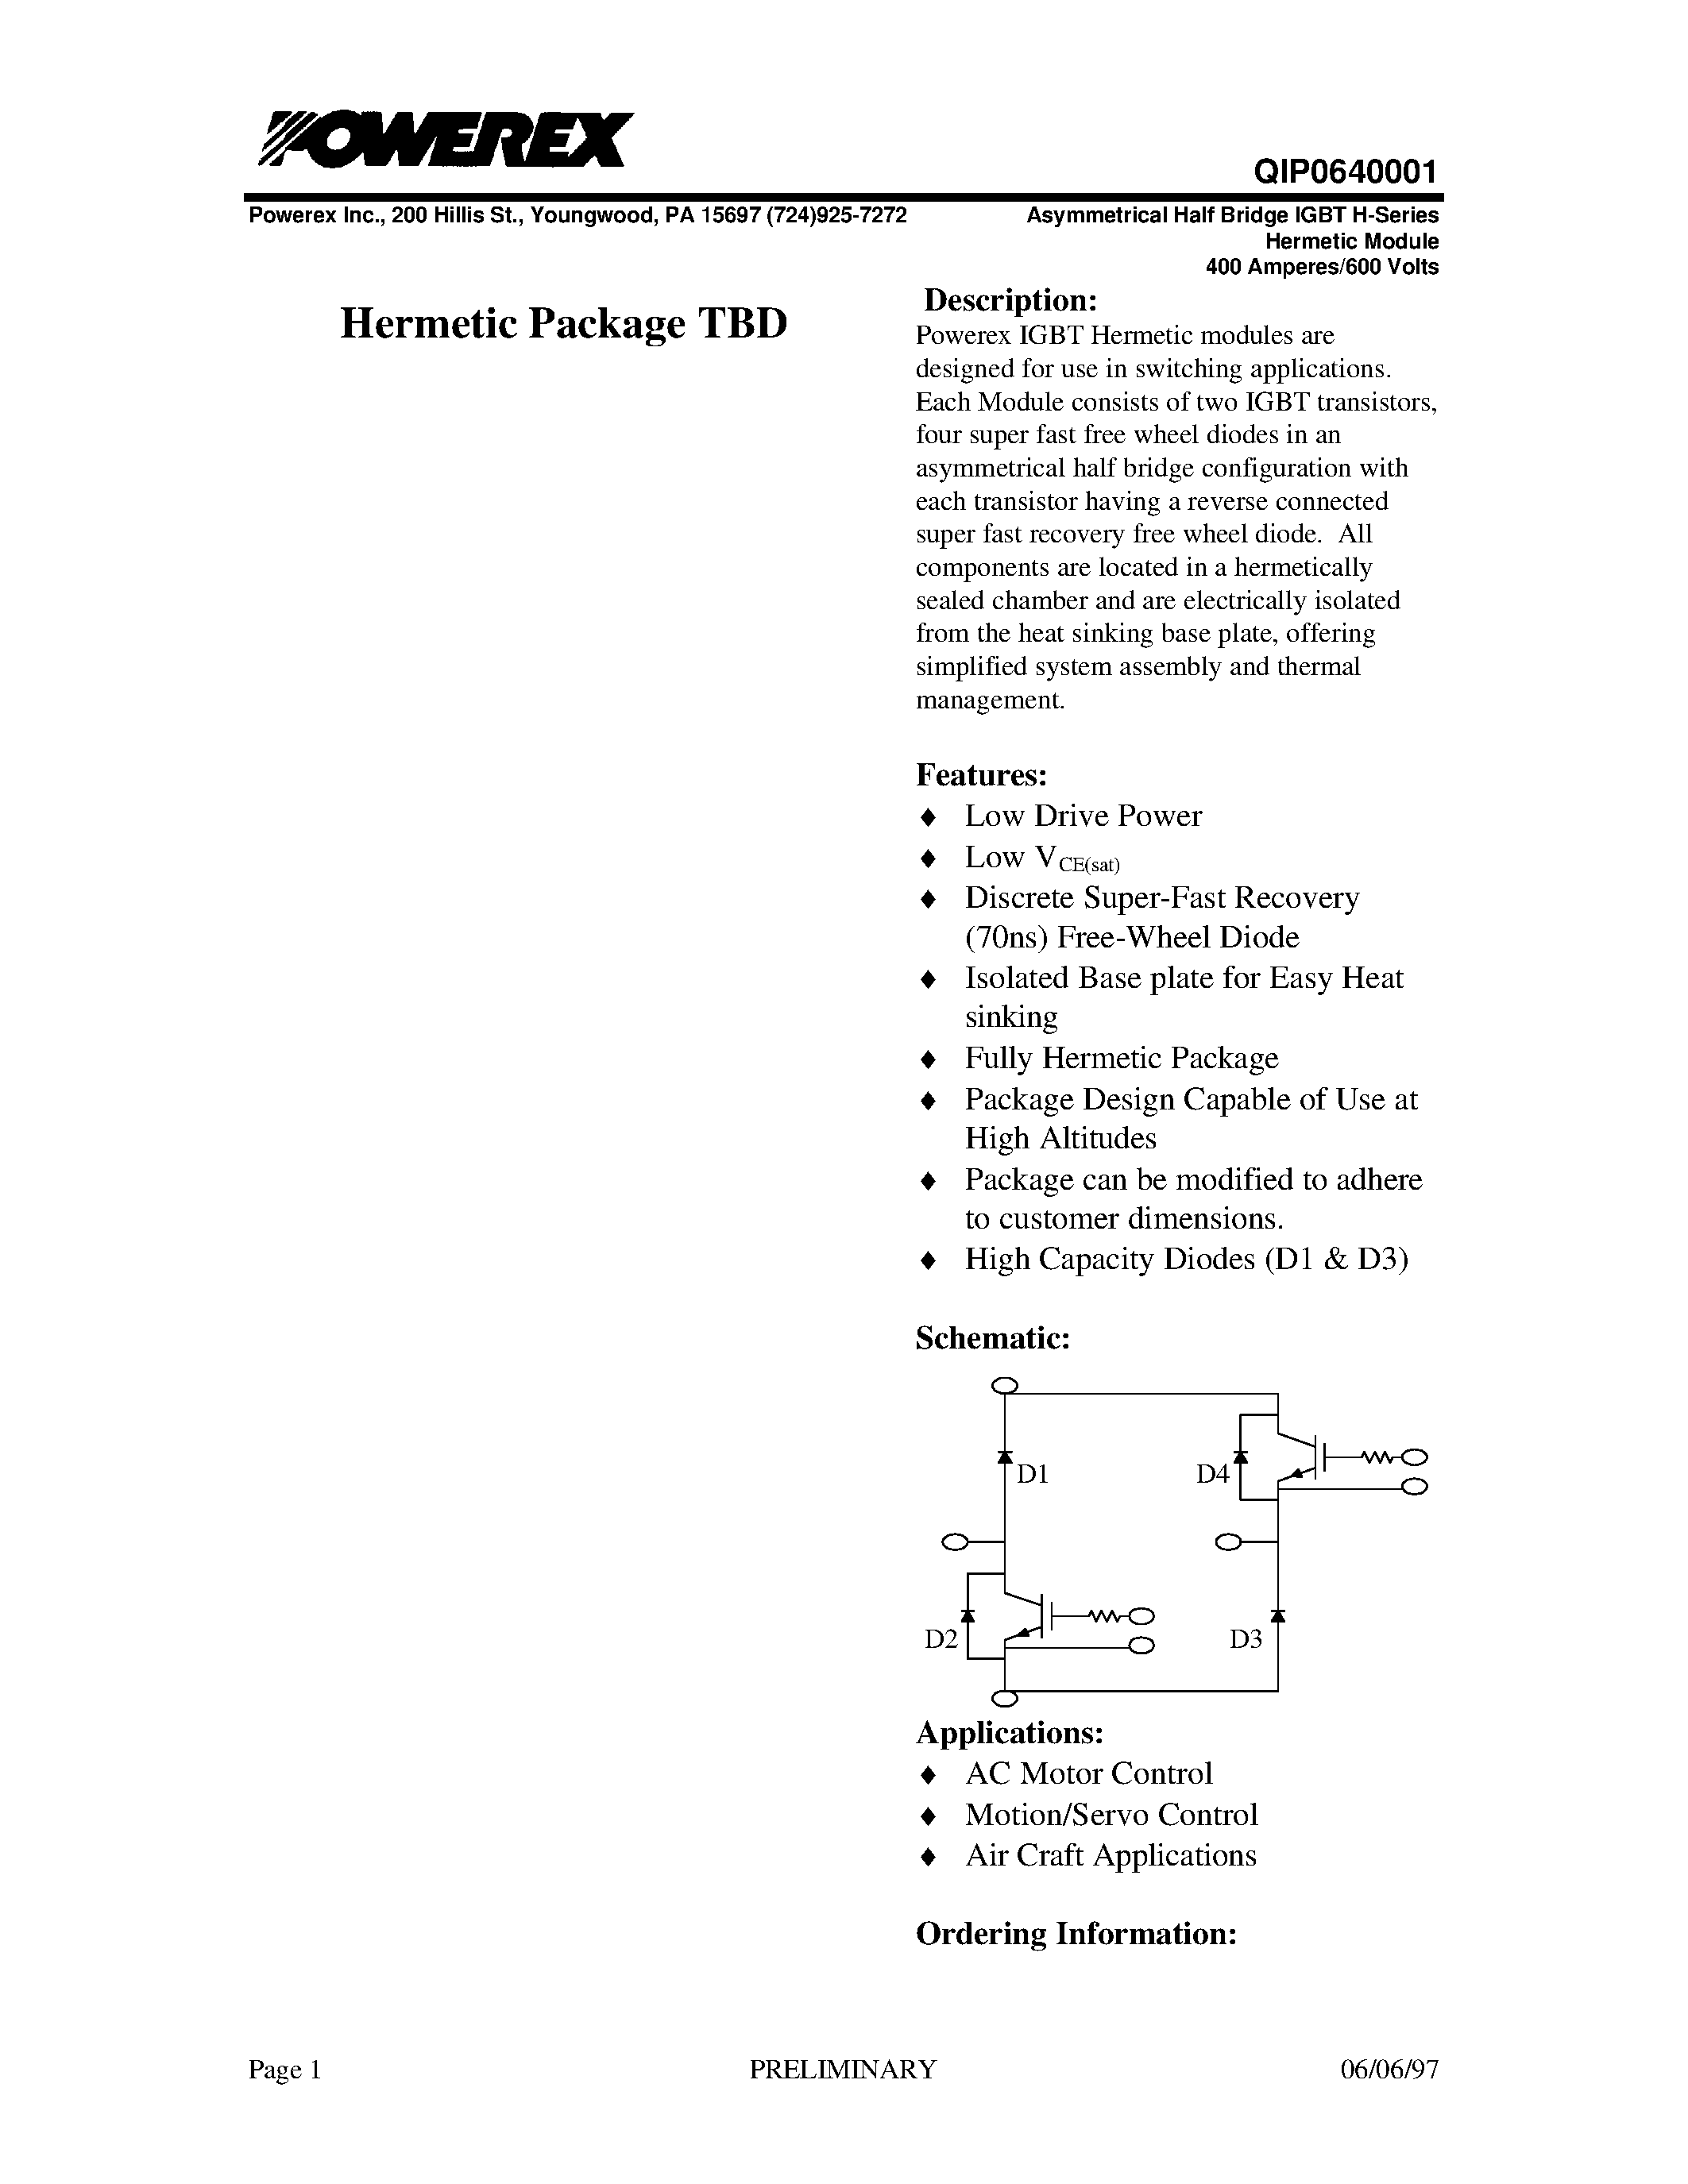 Datasheet QIP0640001 - Asymmetrical Half Bridge IGBT H-Series Hermetic Module (400 Amperes/600 Volts) page 1